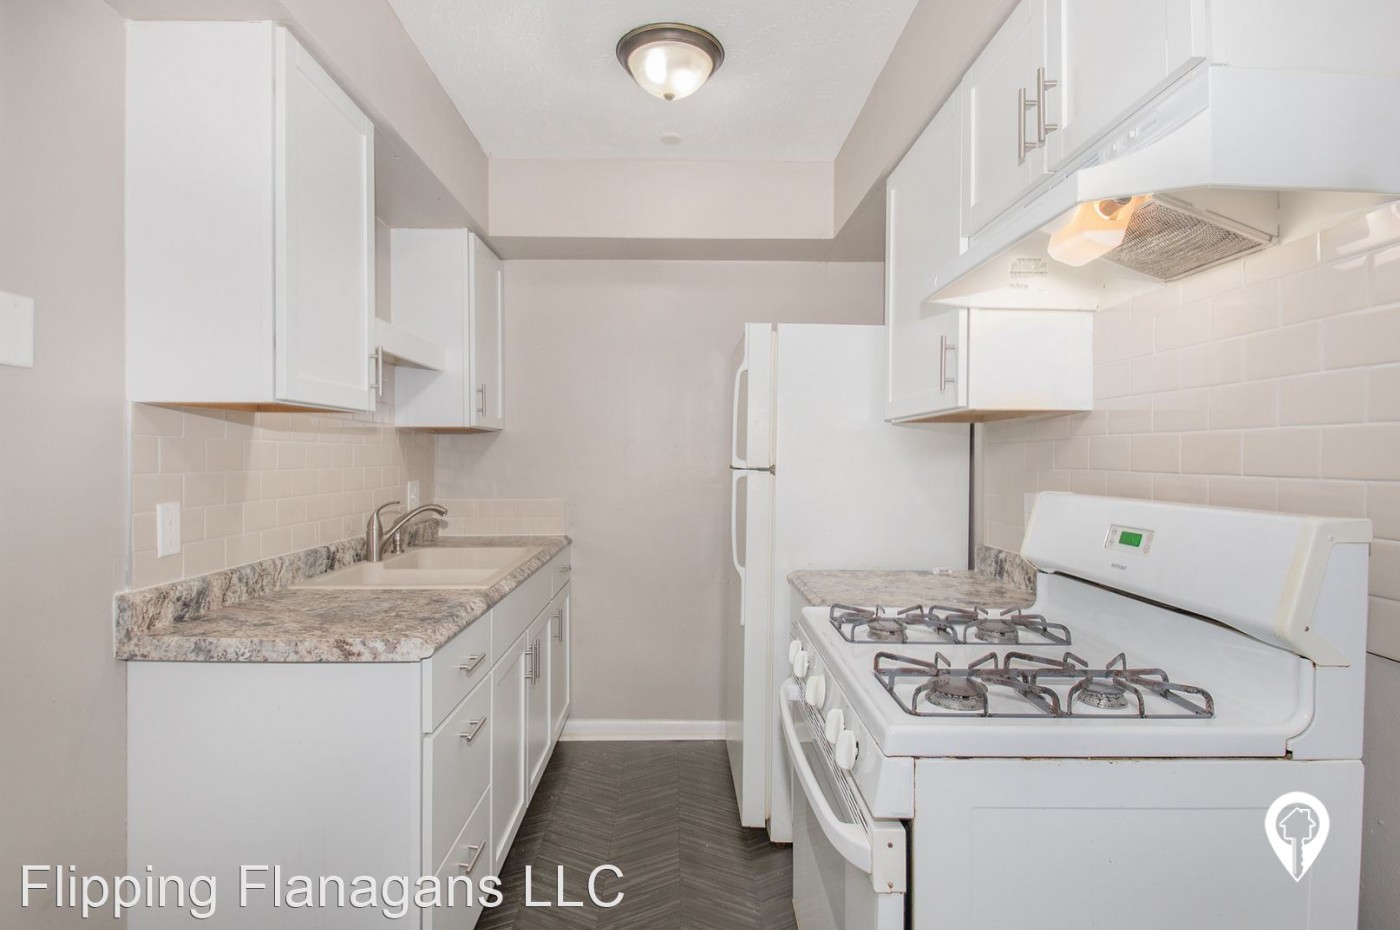 Flipping Flanagans LLC - Franklin Street Apartments